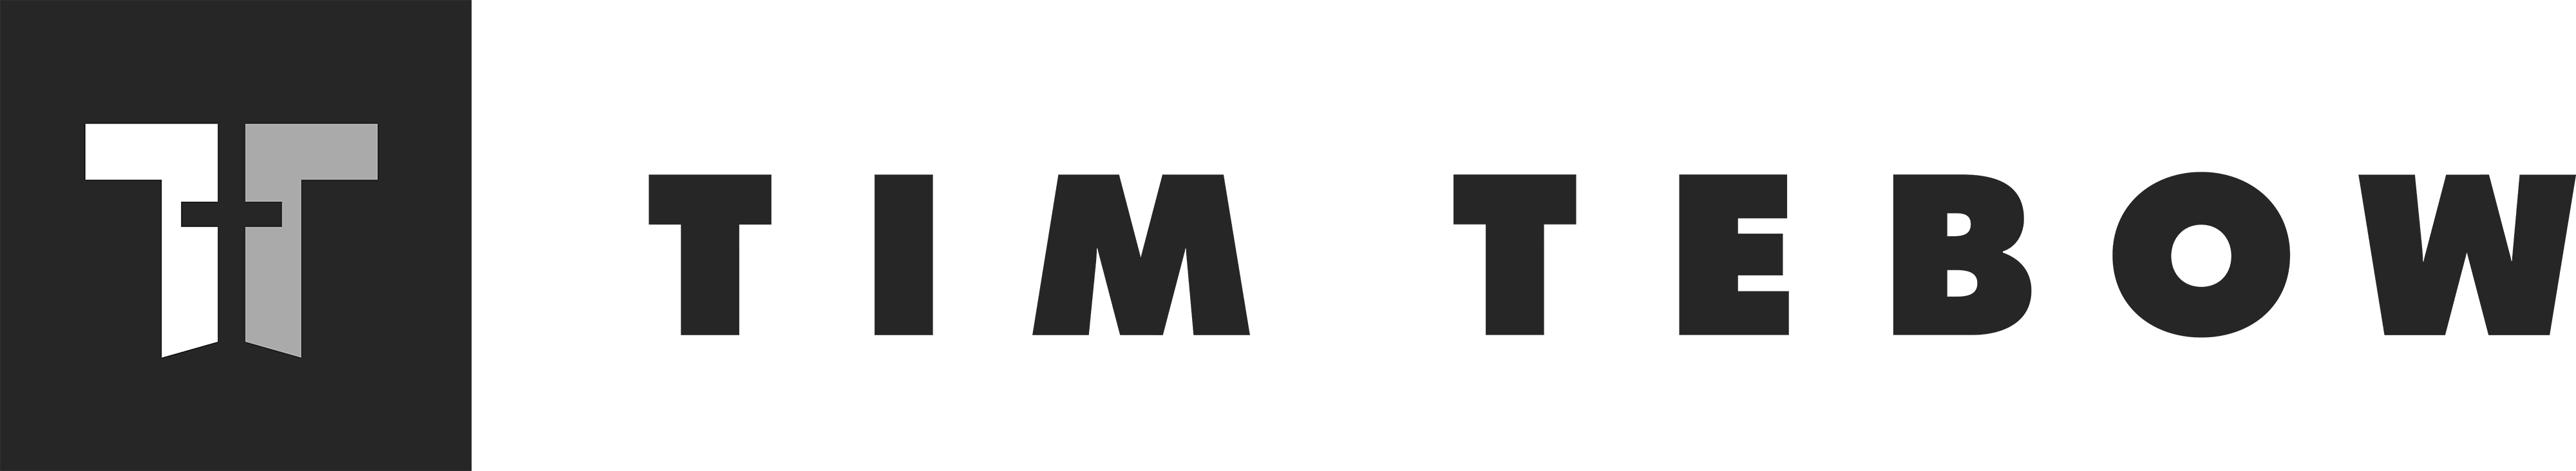 Tim Tebow Foundation Logo